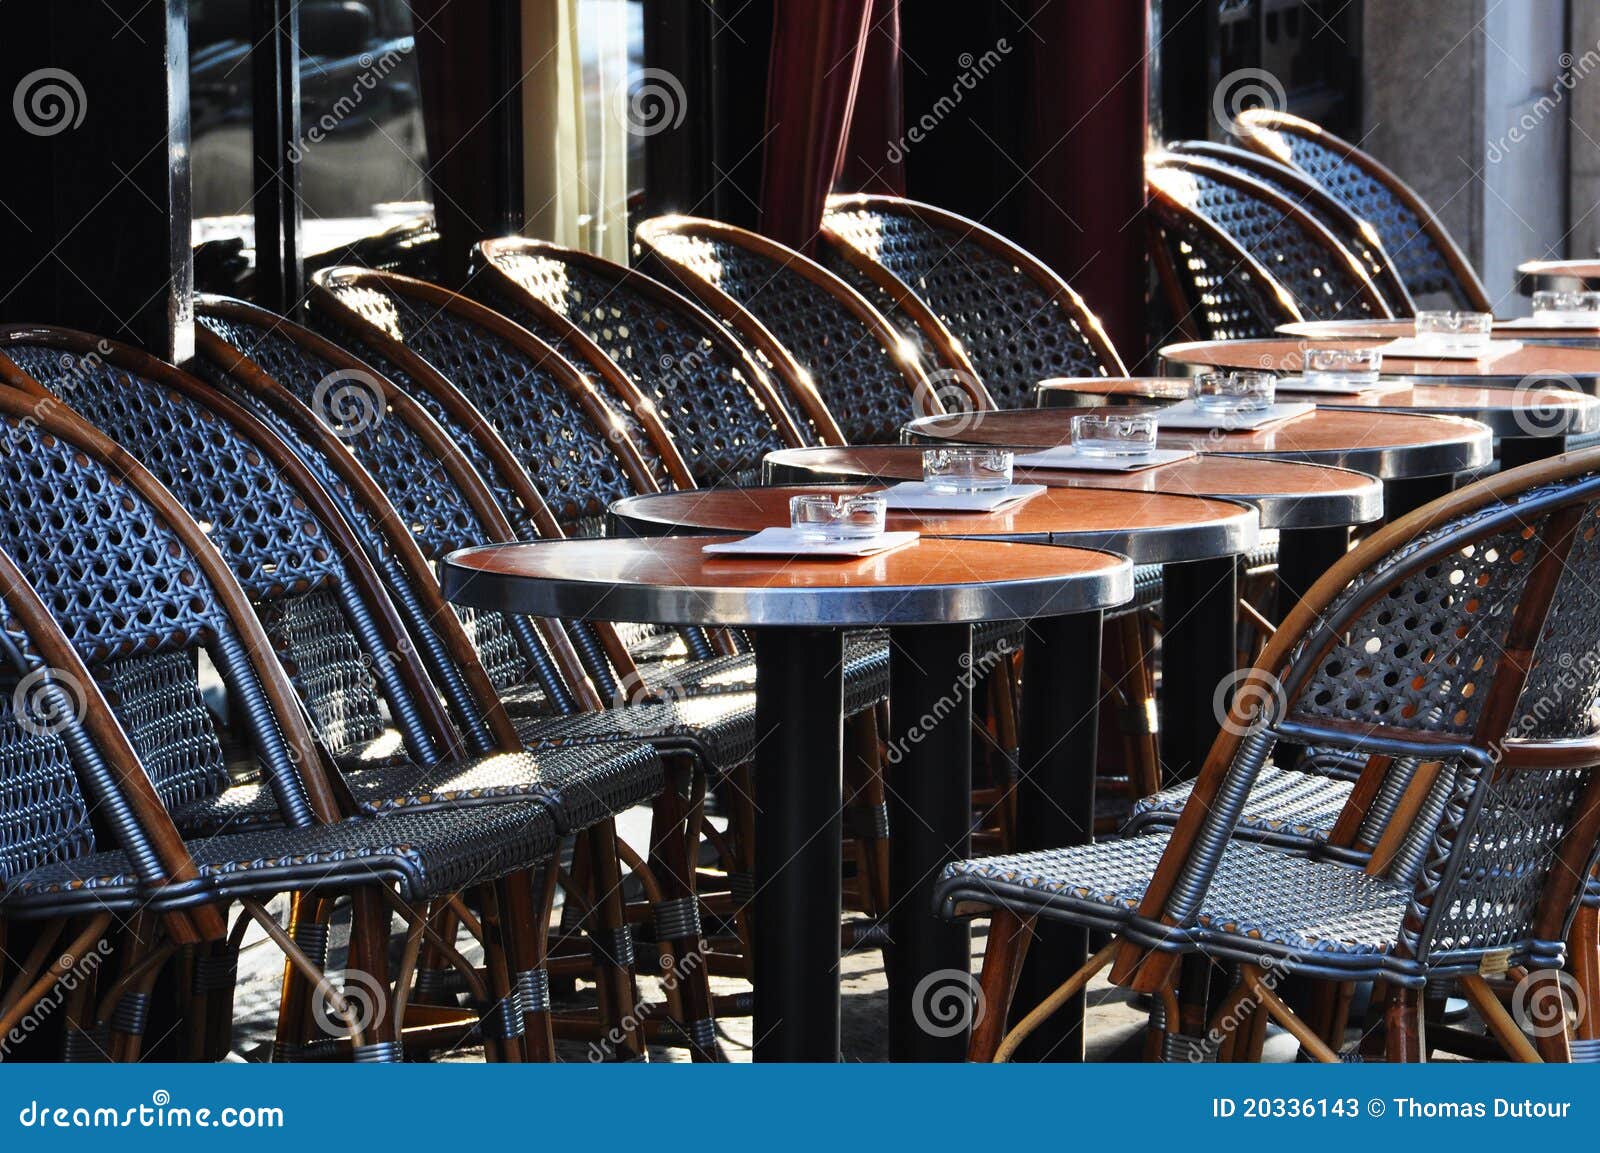 parisian cafe terrace